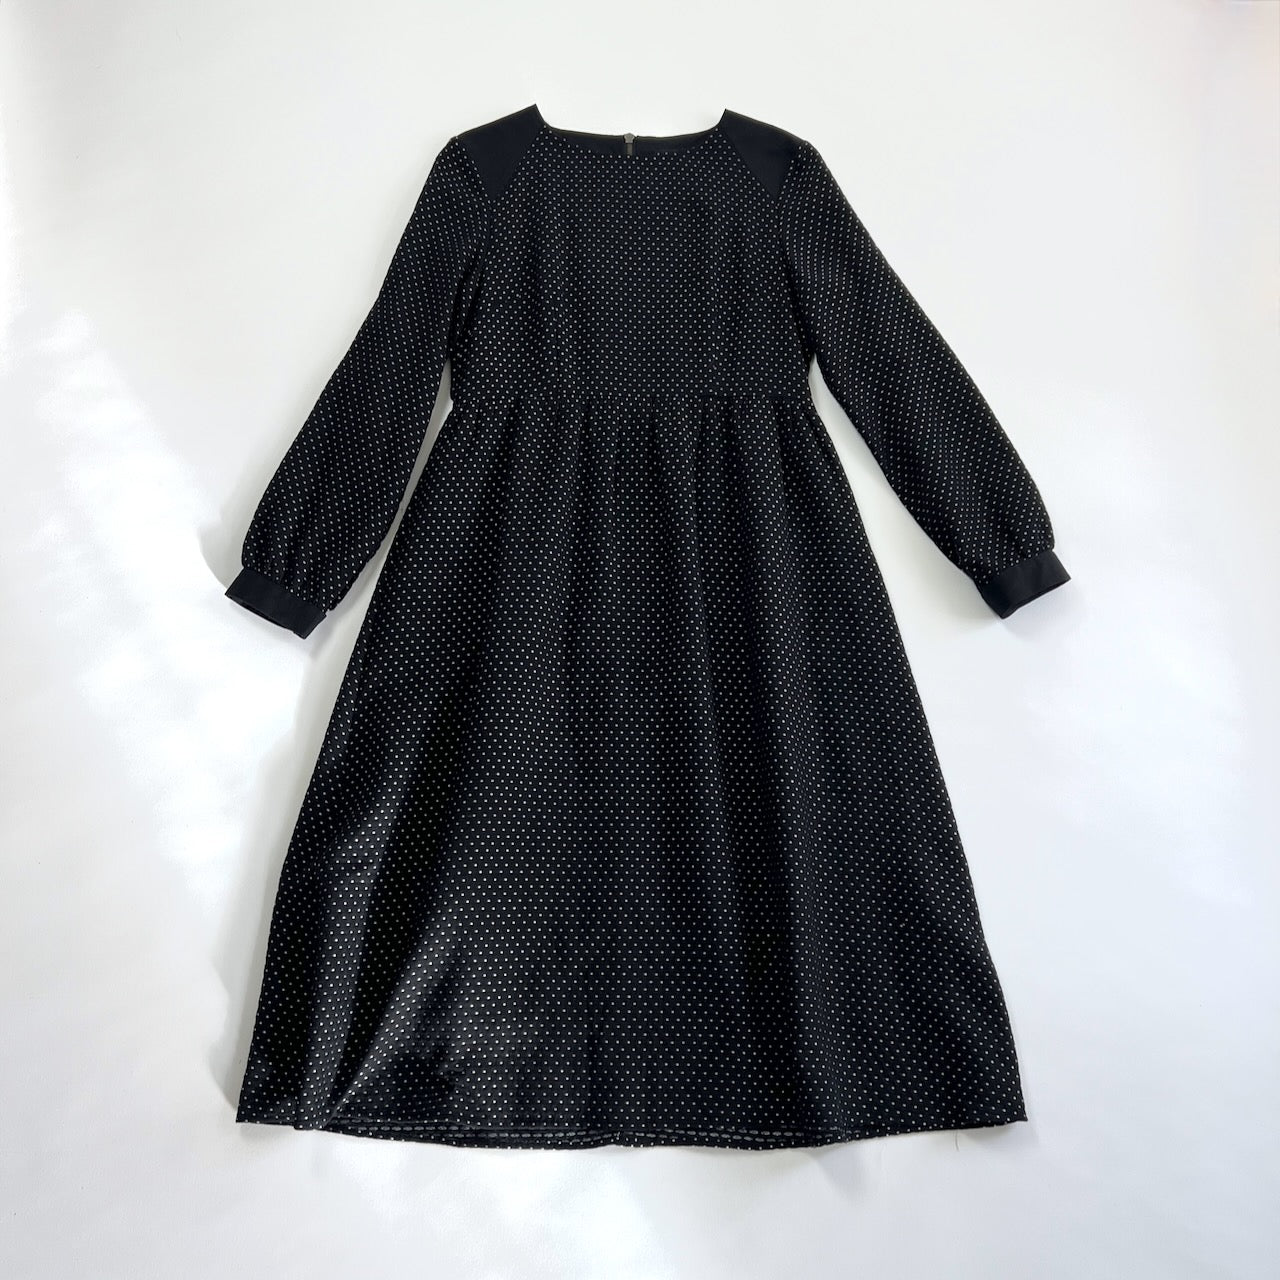 Lowie black pin spot embroidered midi dress UK10 - UK12